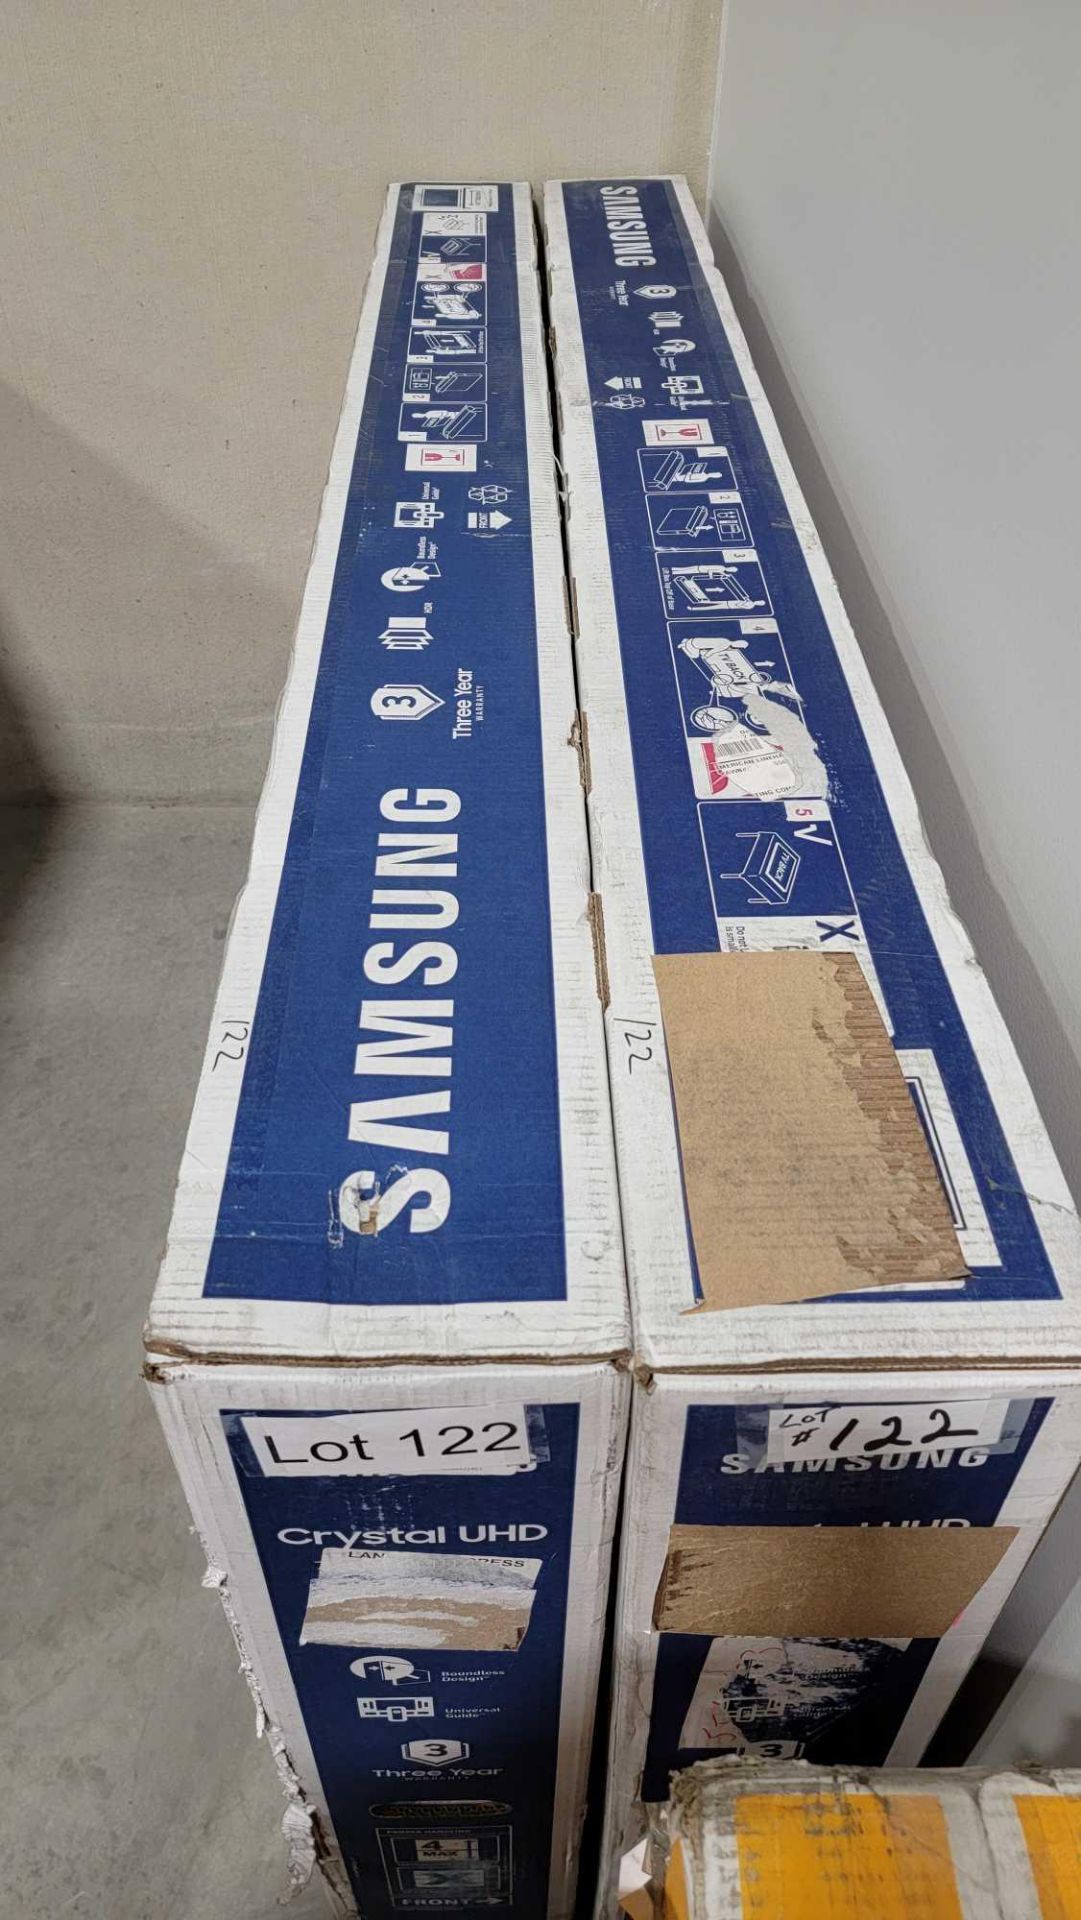 Two Samsung TVs